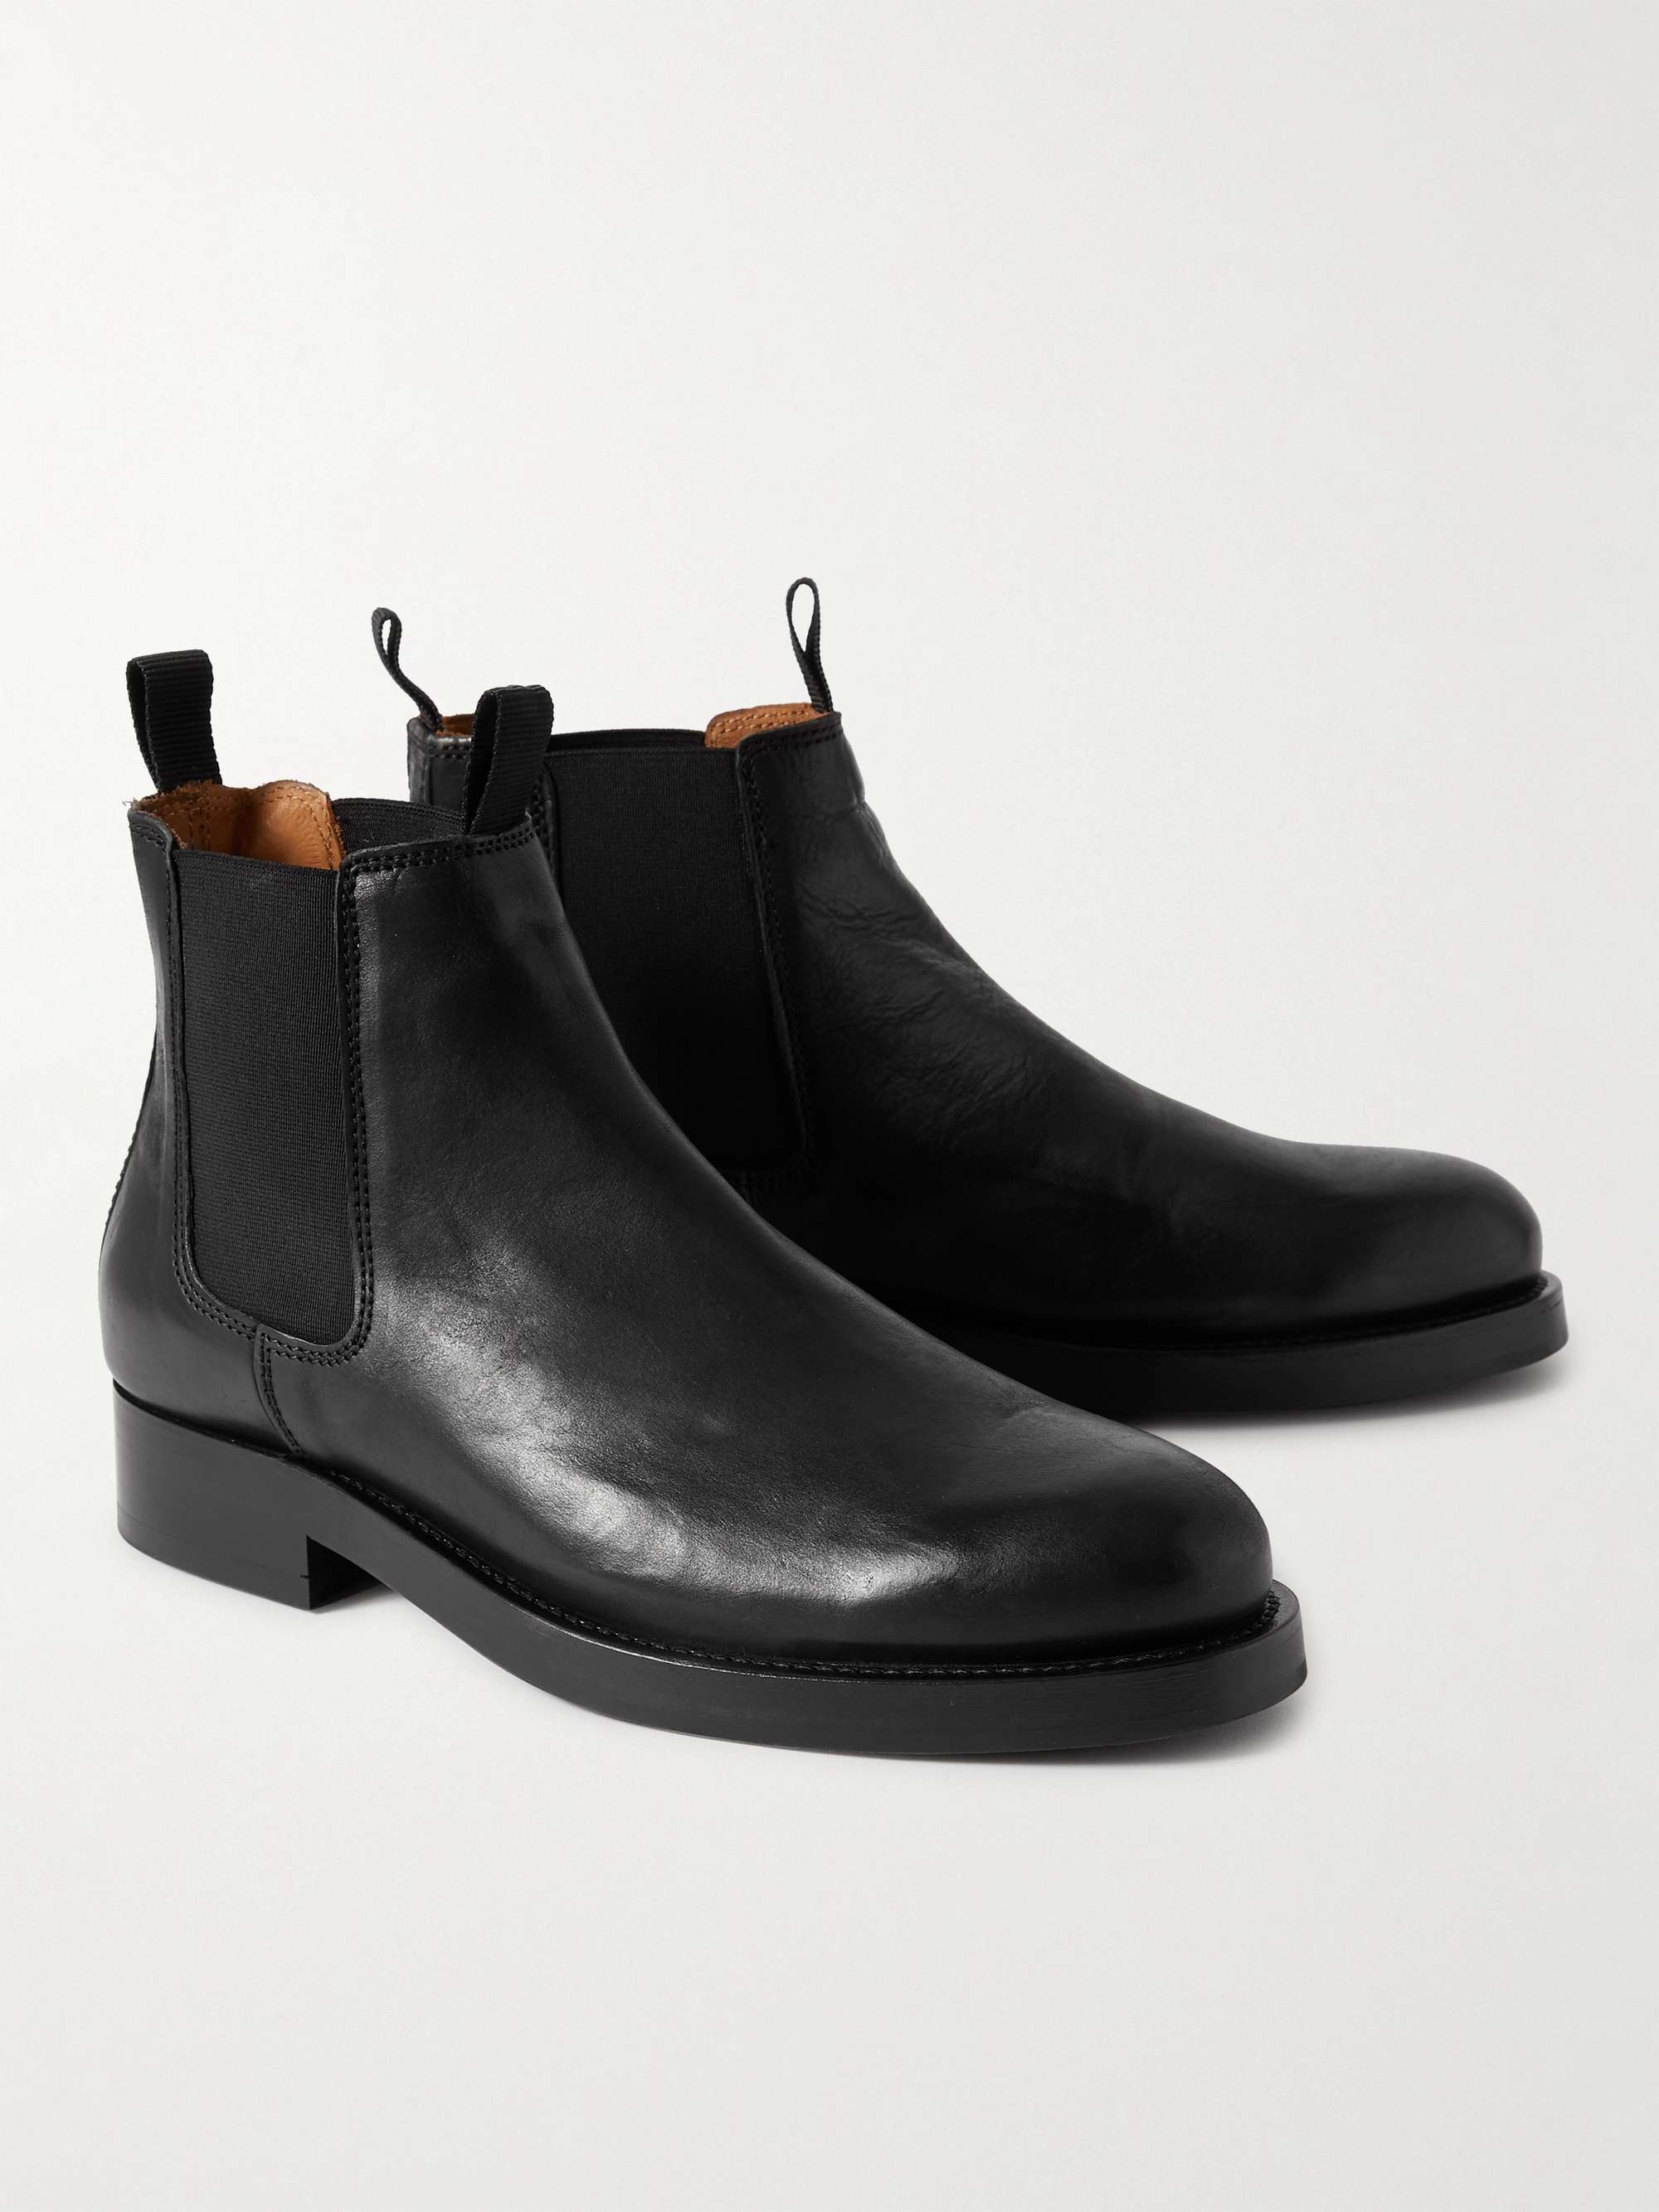 BELSTAFF Longton Leather Chelsea Boots for Men | MR PORTER